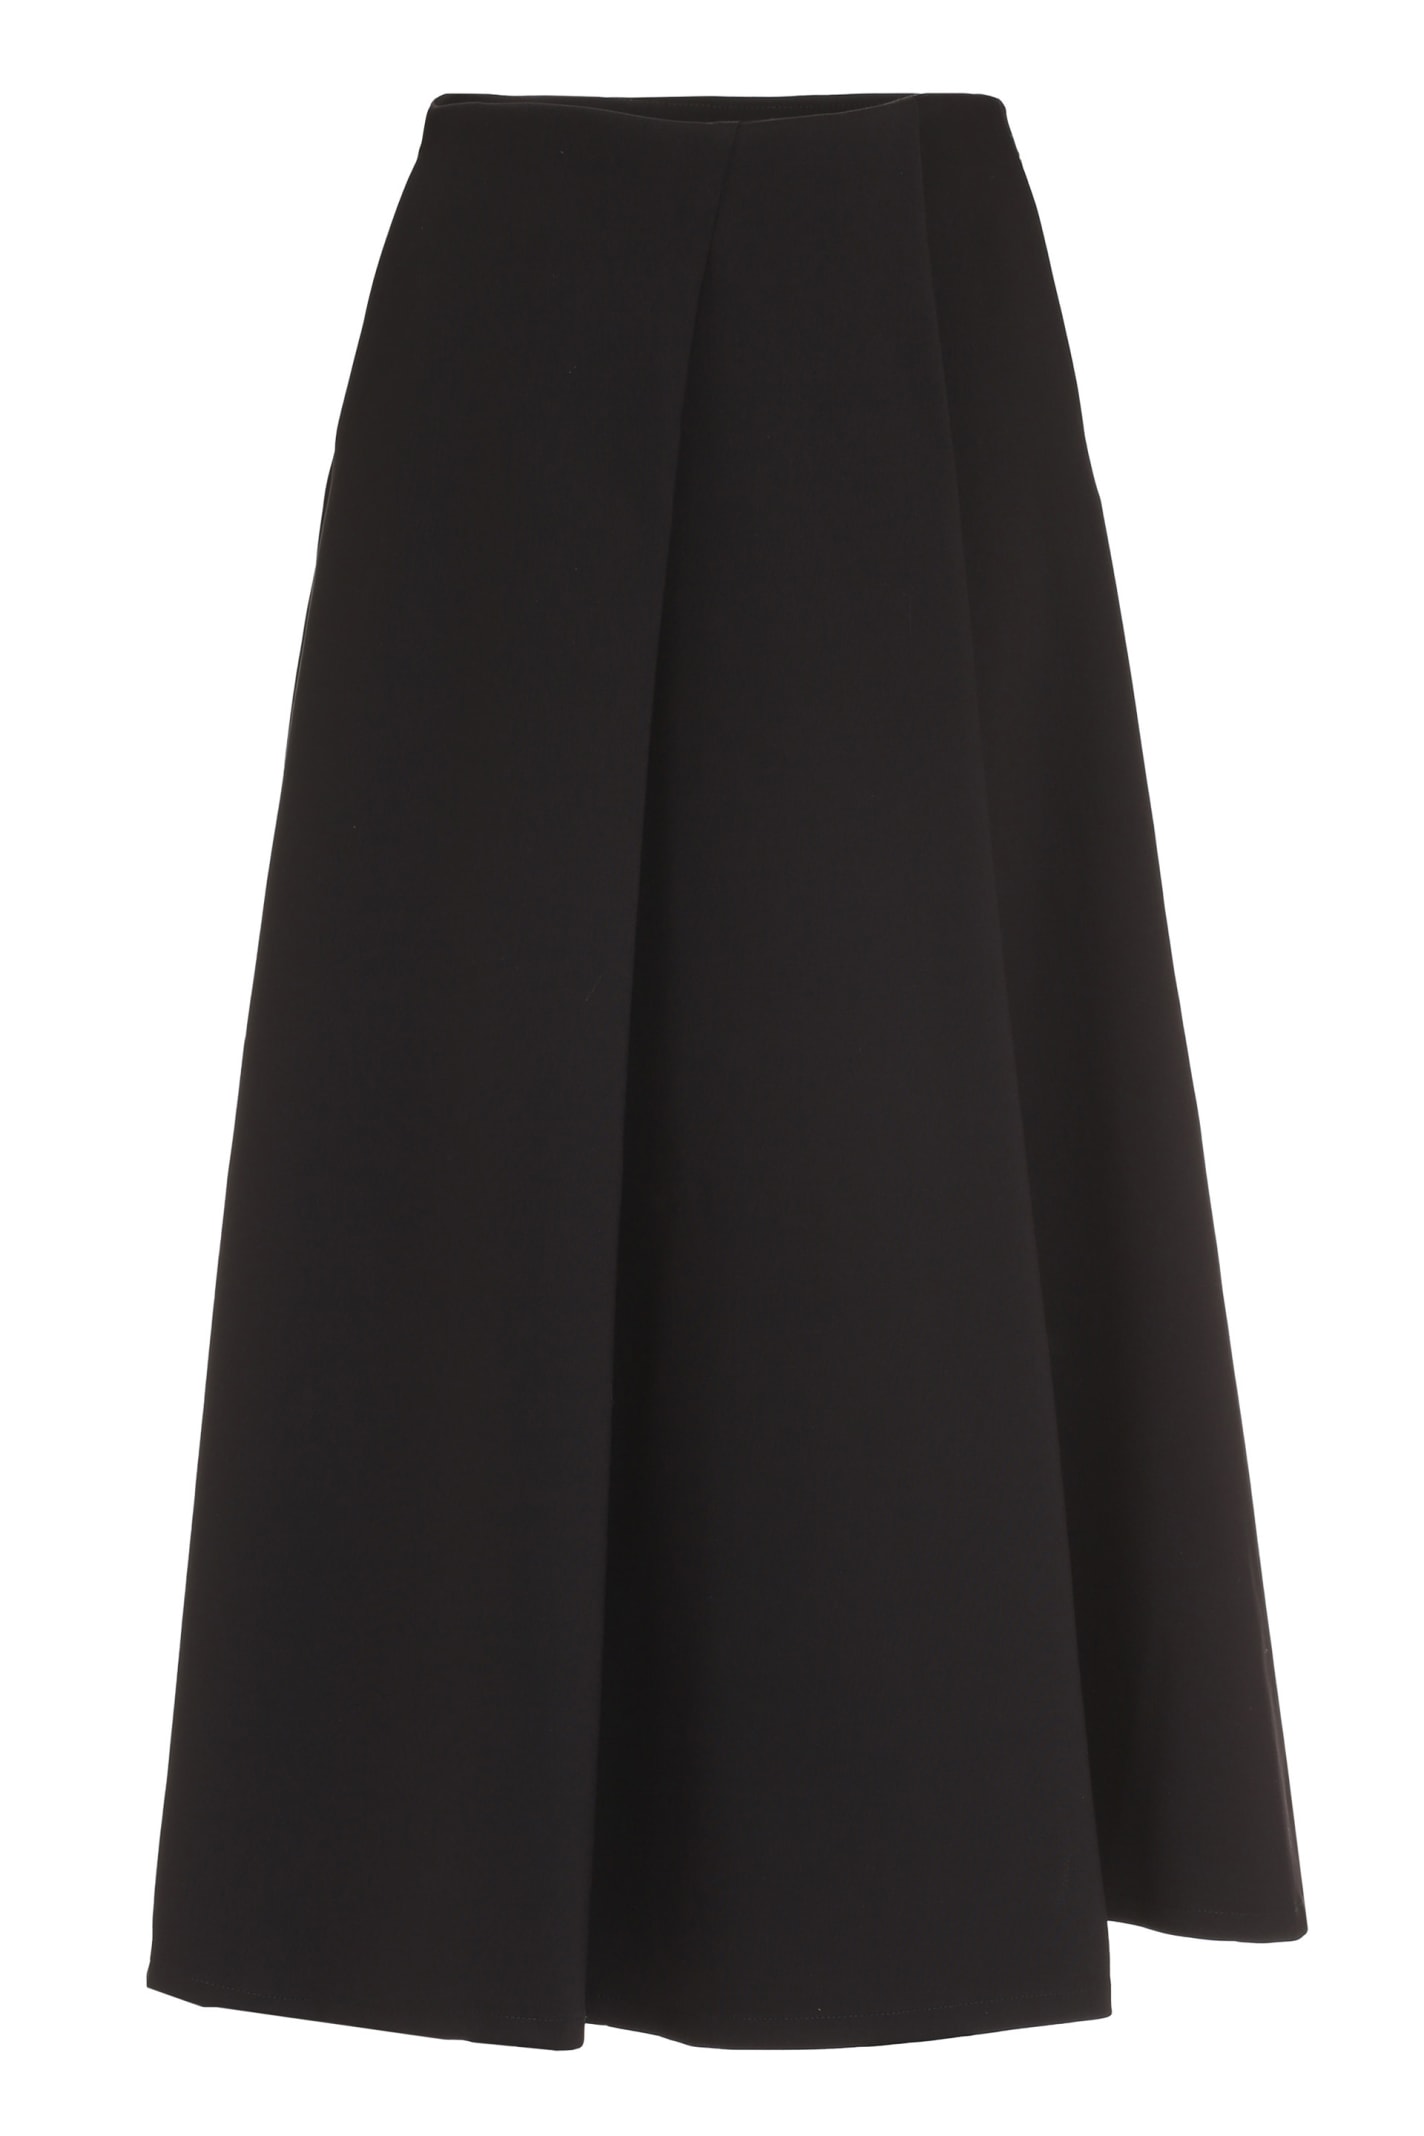 Fabiana Filippi Jersey Detail A-line Skirt